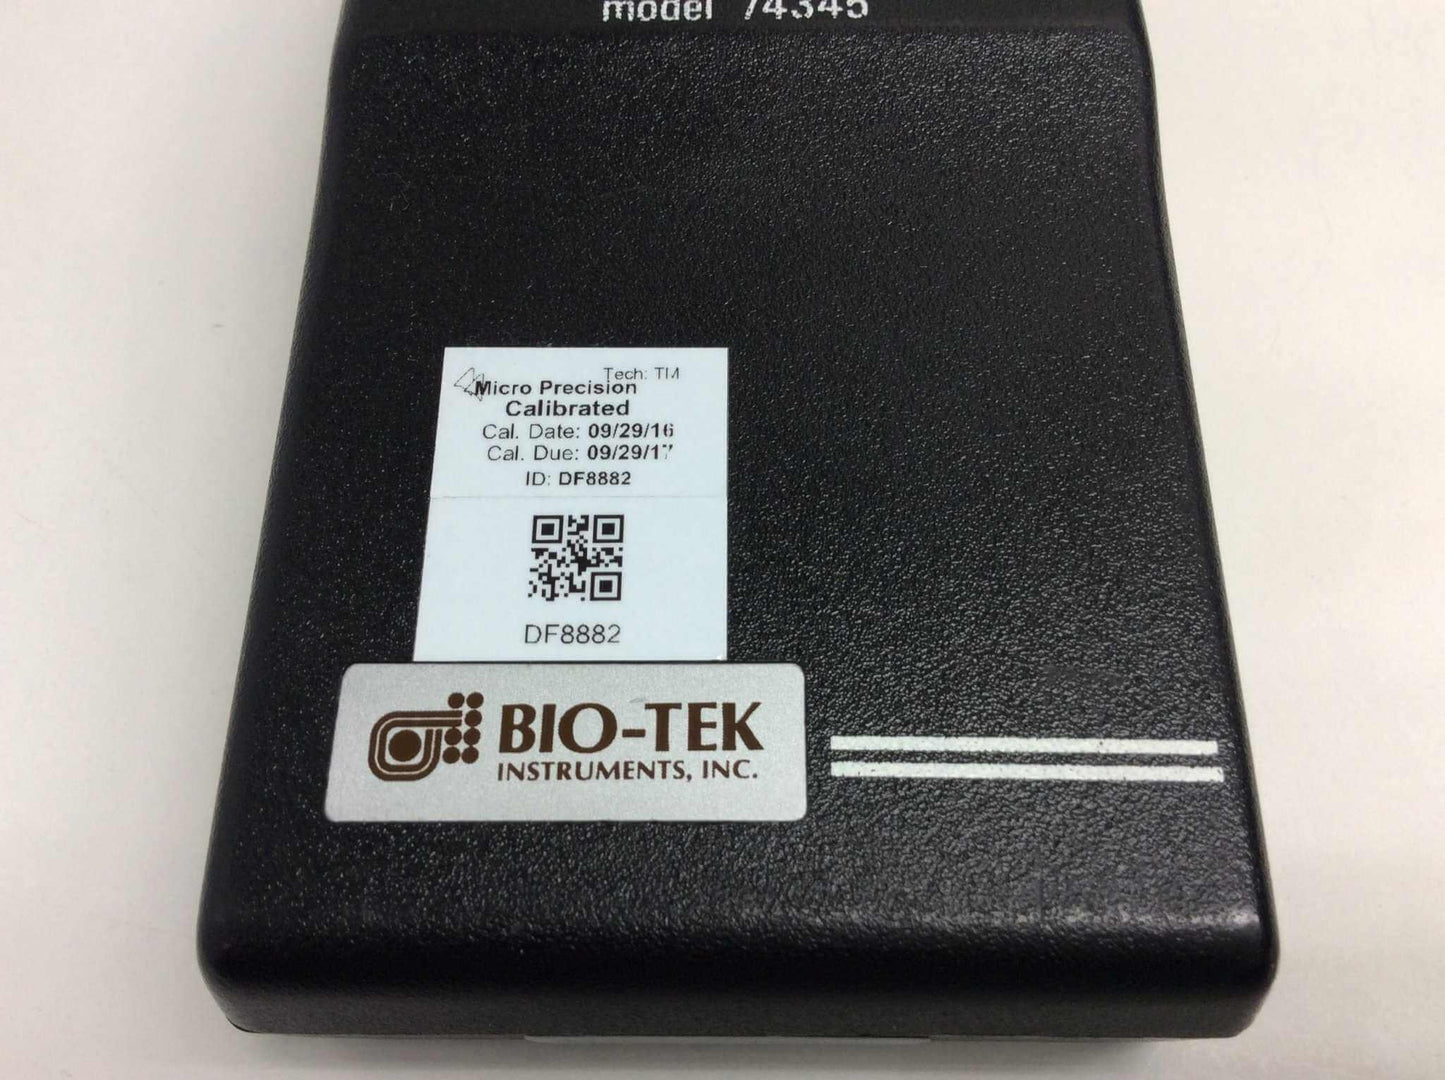 USED Bio-Tek Phototherapy Digital Radiometer 450 nm Model 74345 - MBR Medicals